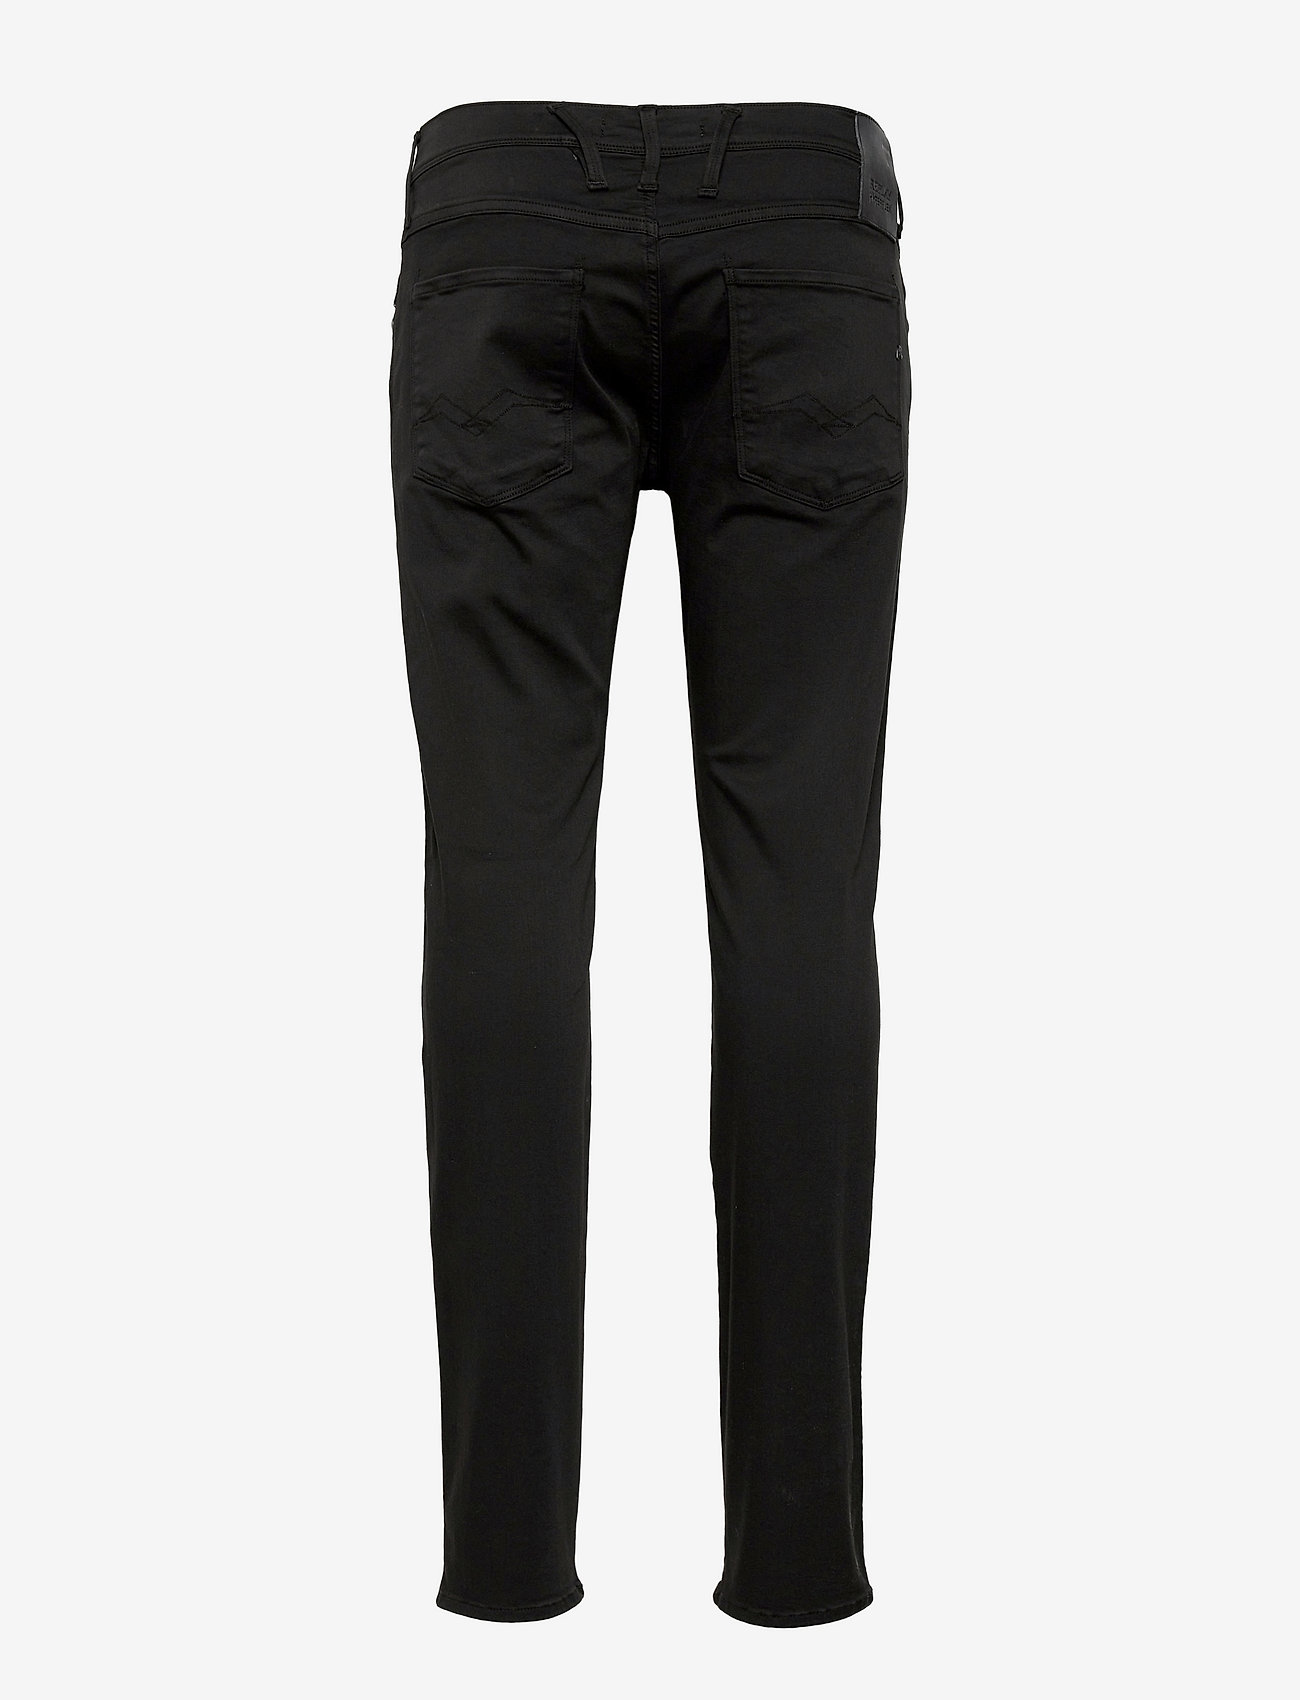 Replay - ANBASS Trousers Hyperflex Colour XLite - slim jeans - black - 1